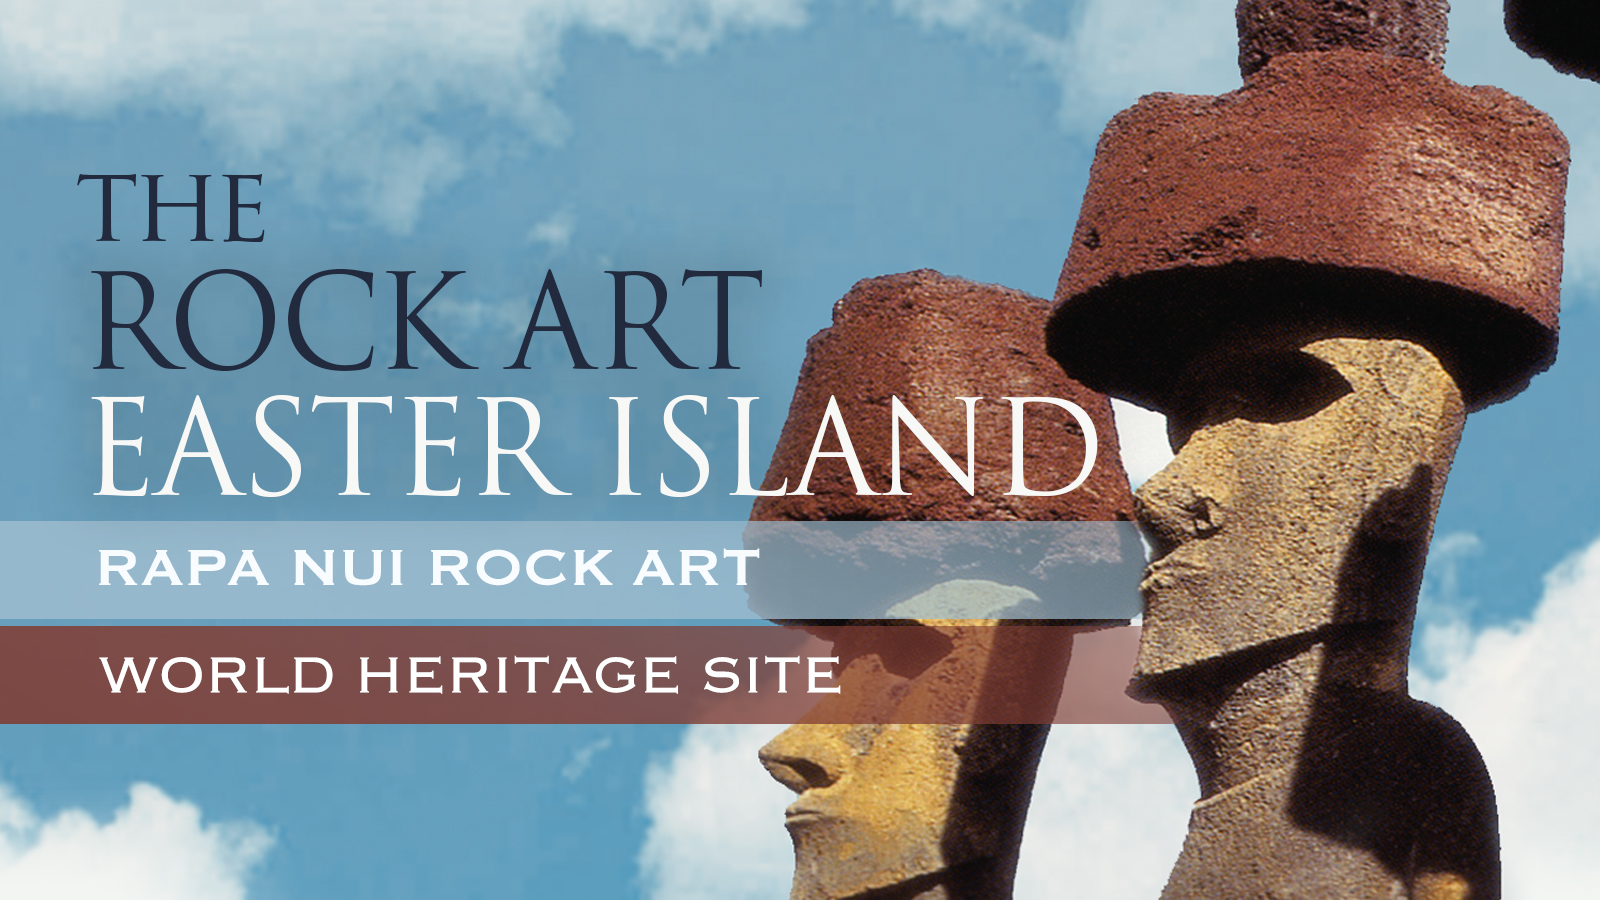 Easter Island Moai Statues and Rock Art of Rapa Nui